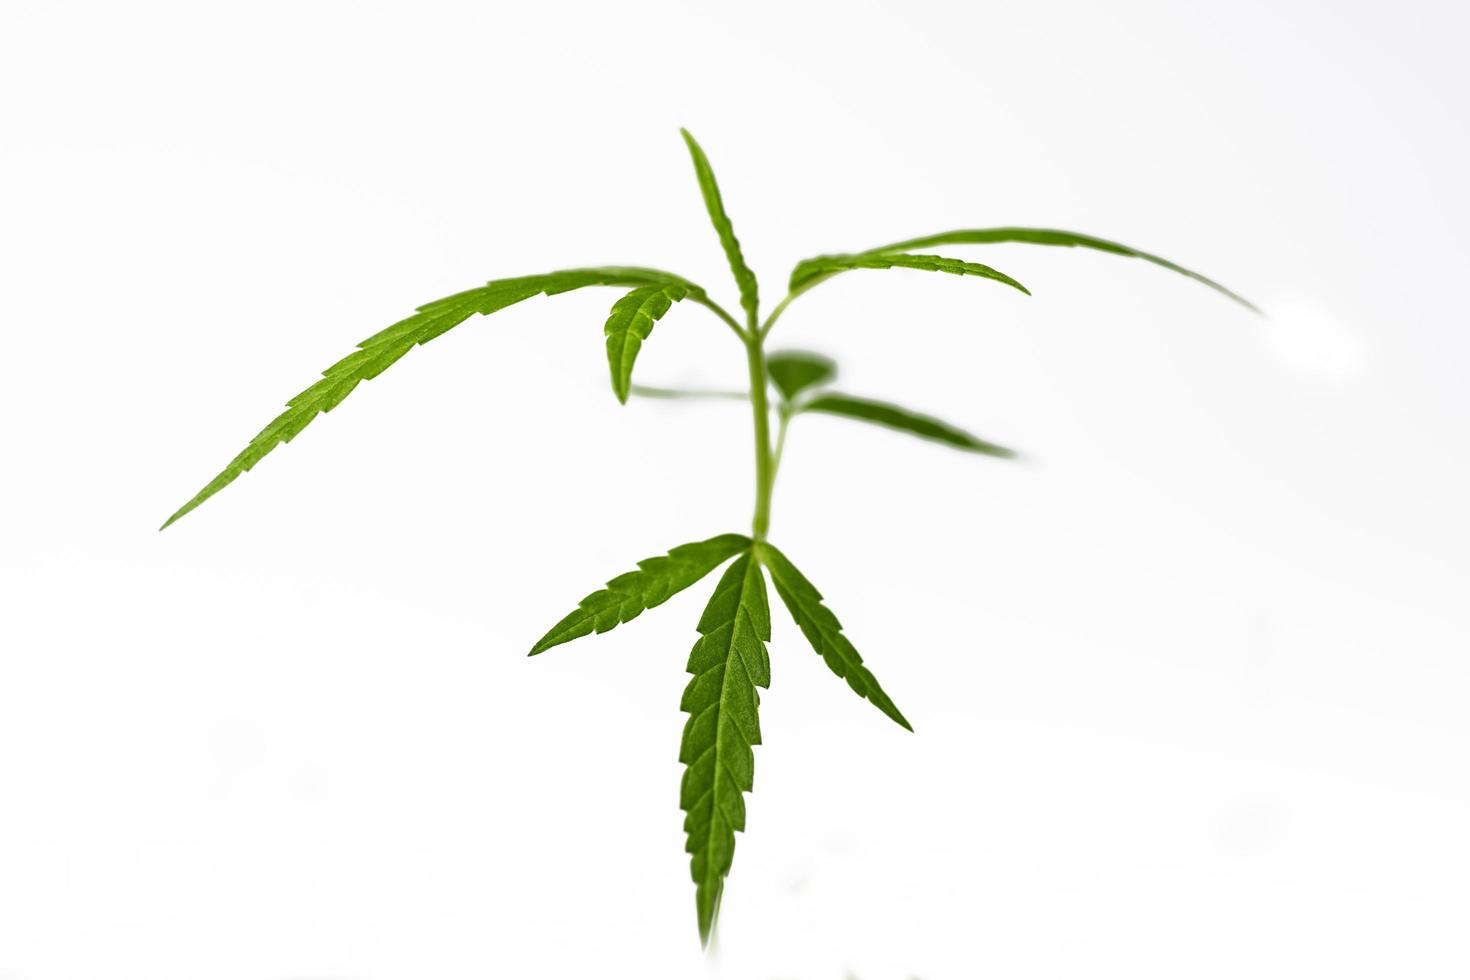 groeiende cannabis, marihuana groene kruid leaves.soft focus. foto